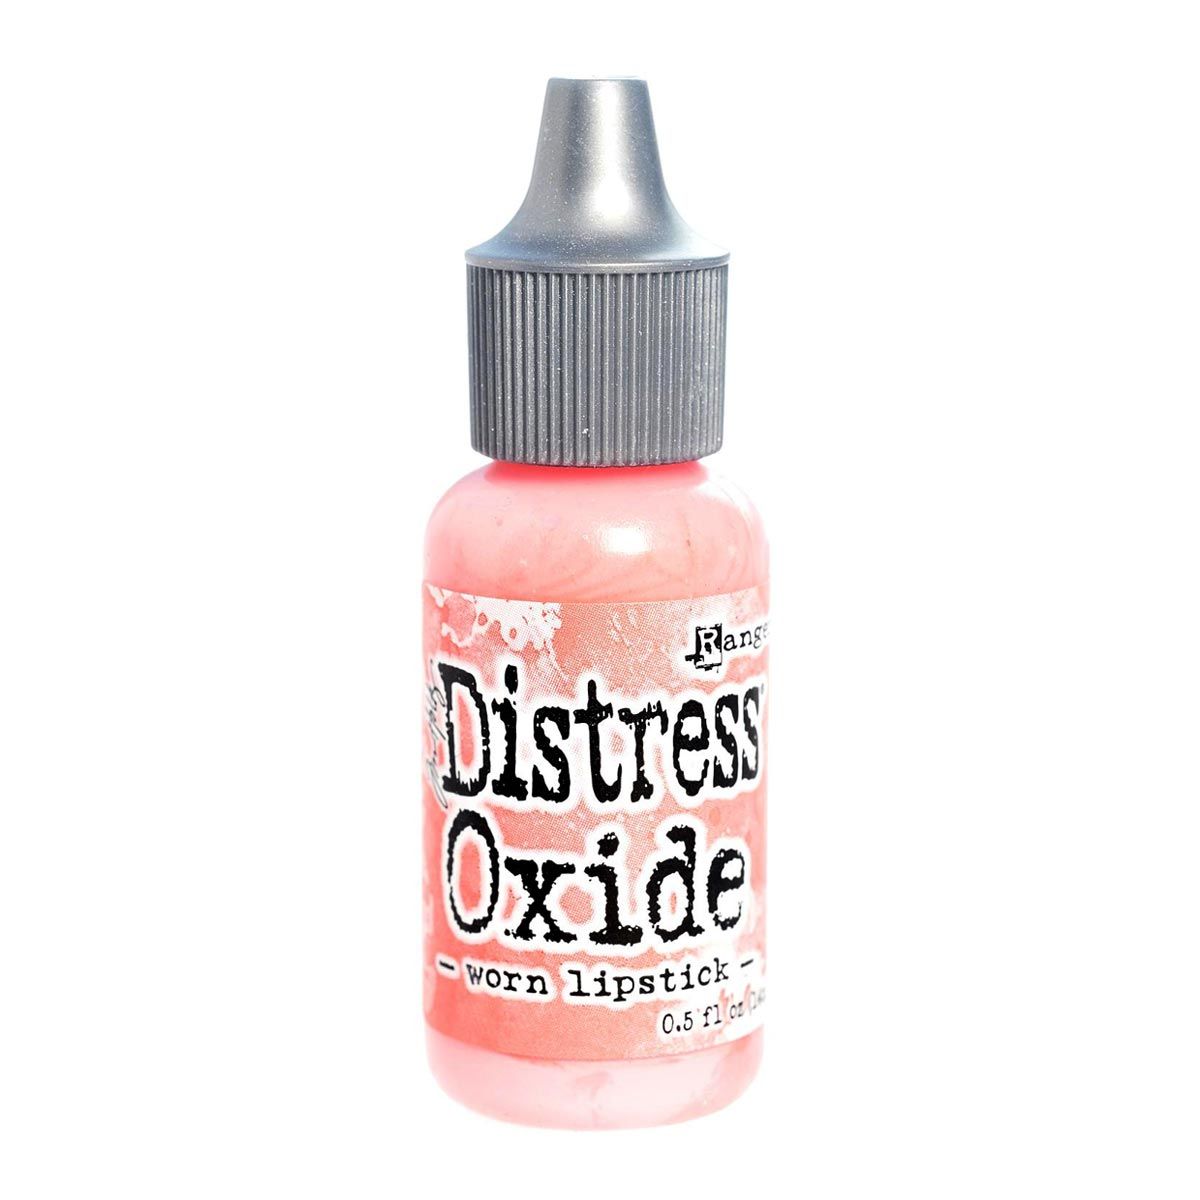 Tim Holtz Distress Oxide Worn Lipstick .5oz